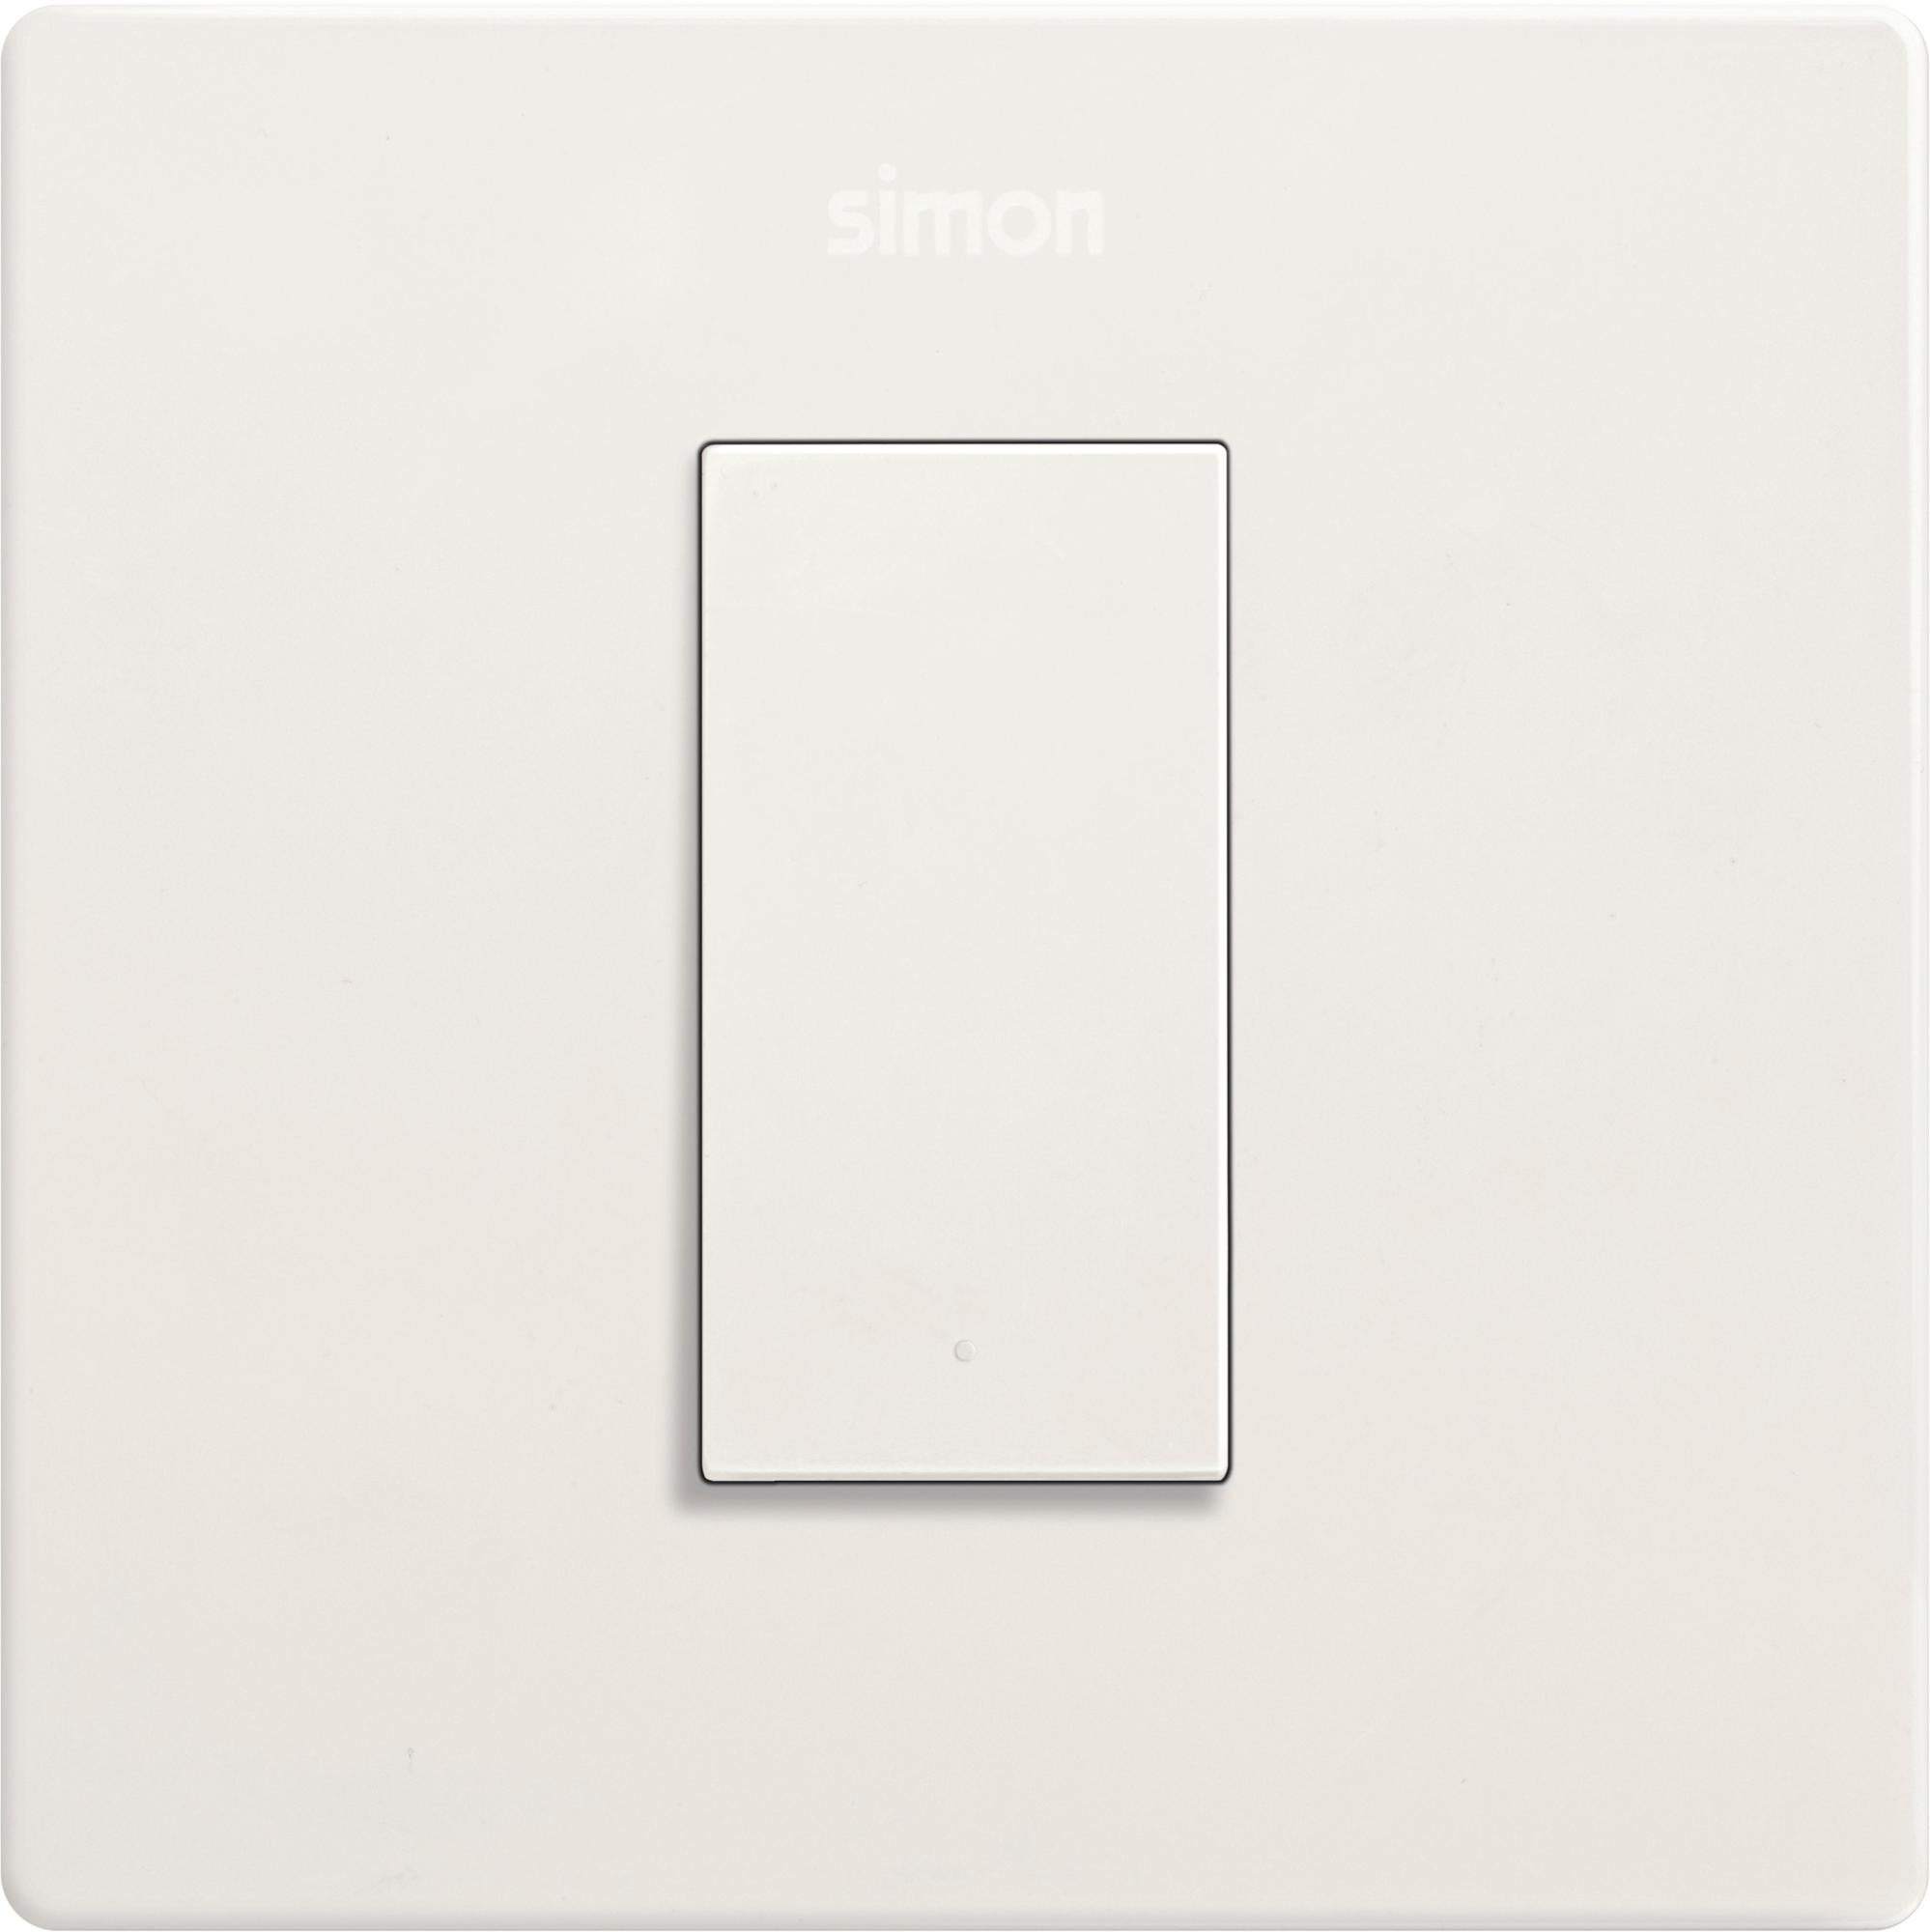 Kit interruptor/conmutador 1mod simon 270 blanco